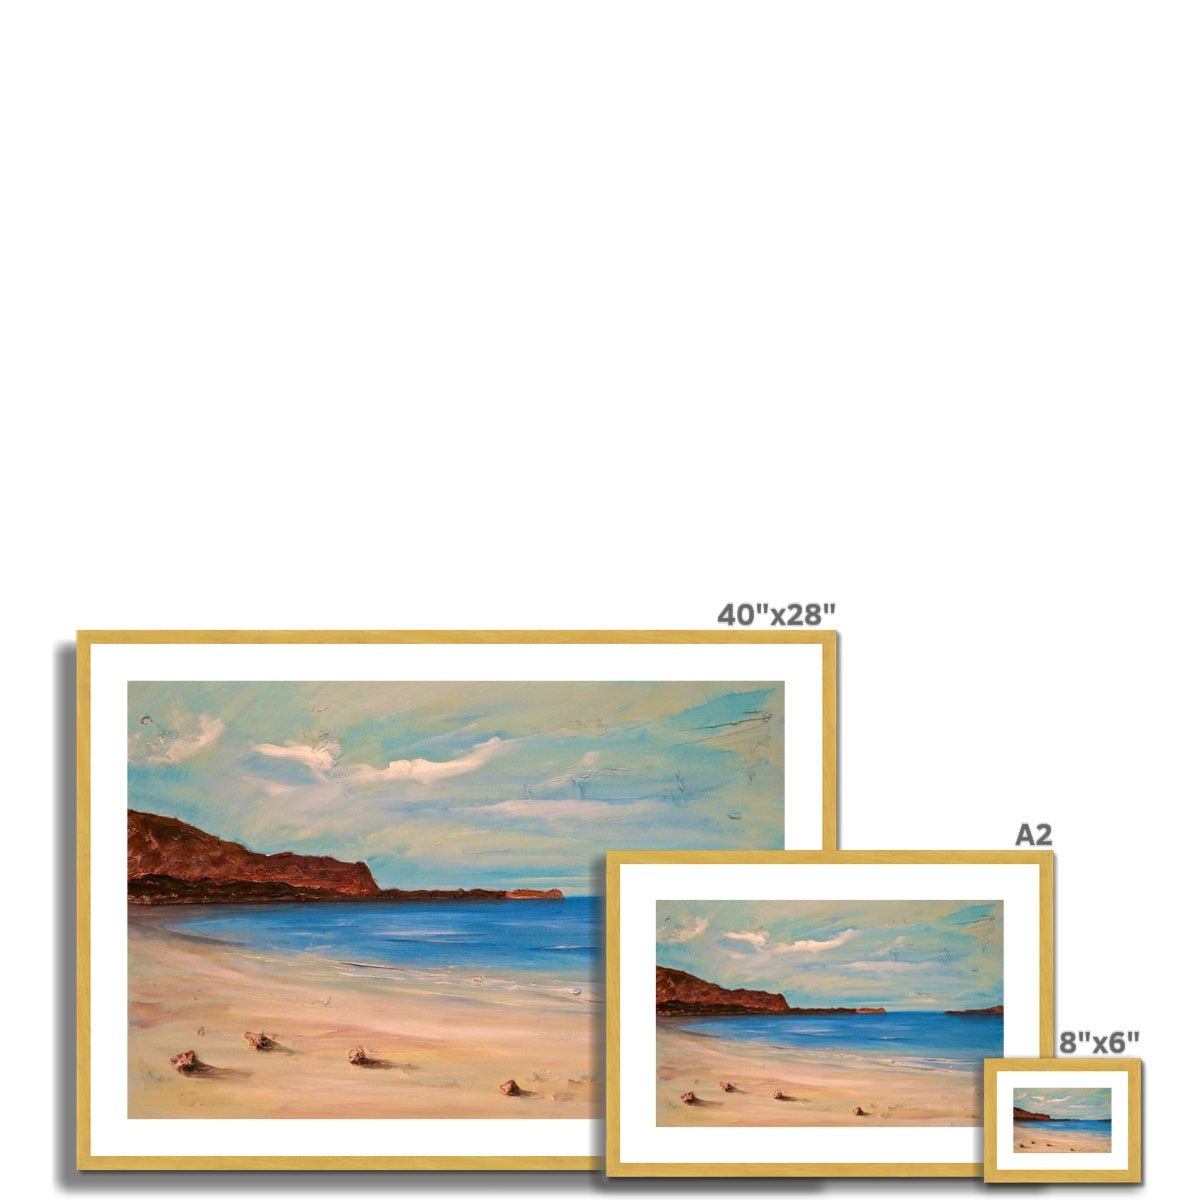 Bosta Beach Lewis Painting | Antique Framed & Mounted Prints From Scotland-Antique Framed & Mounted Prints-Hebridean Islands Art Gallery-Paintings, Prints, Homeware, Art Gifts From Scotland By Scottish Artist Kevin Hunter